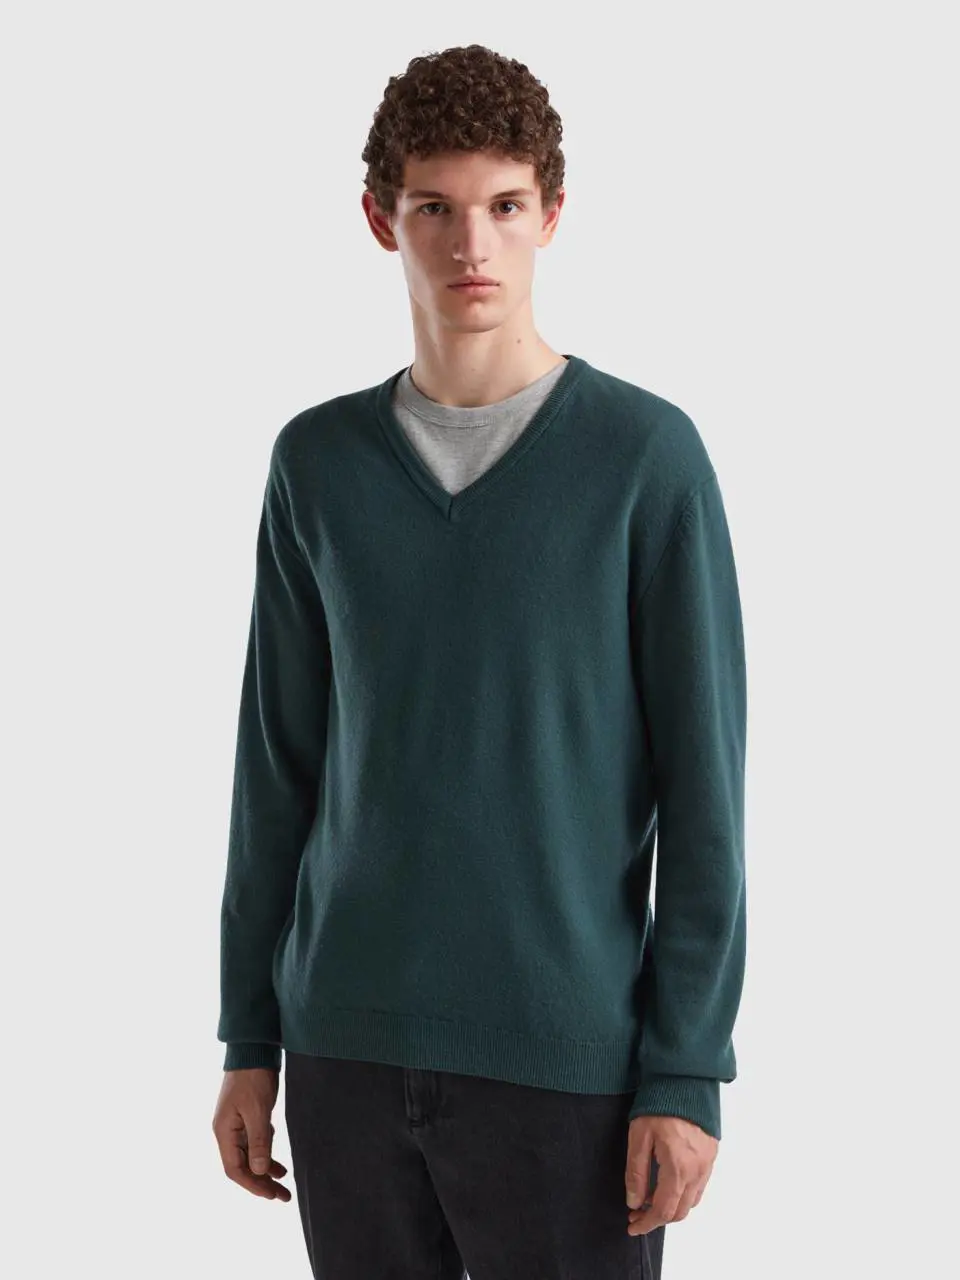 Benetton dark green v-neck sweater in pure merino wool. 1